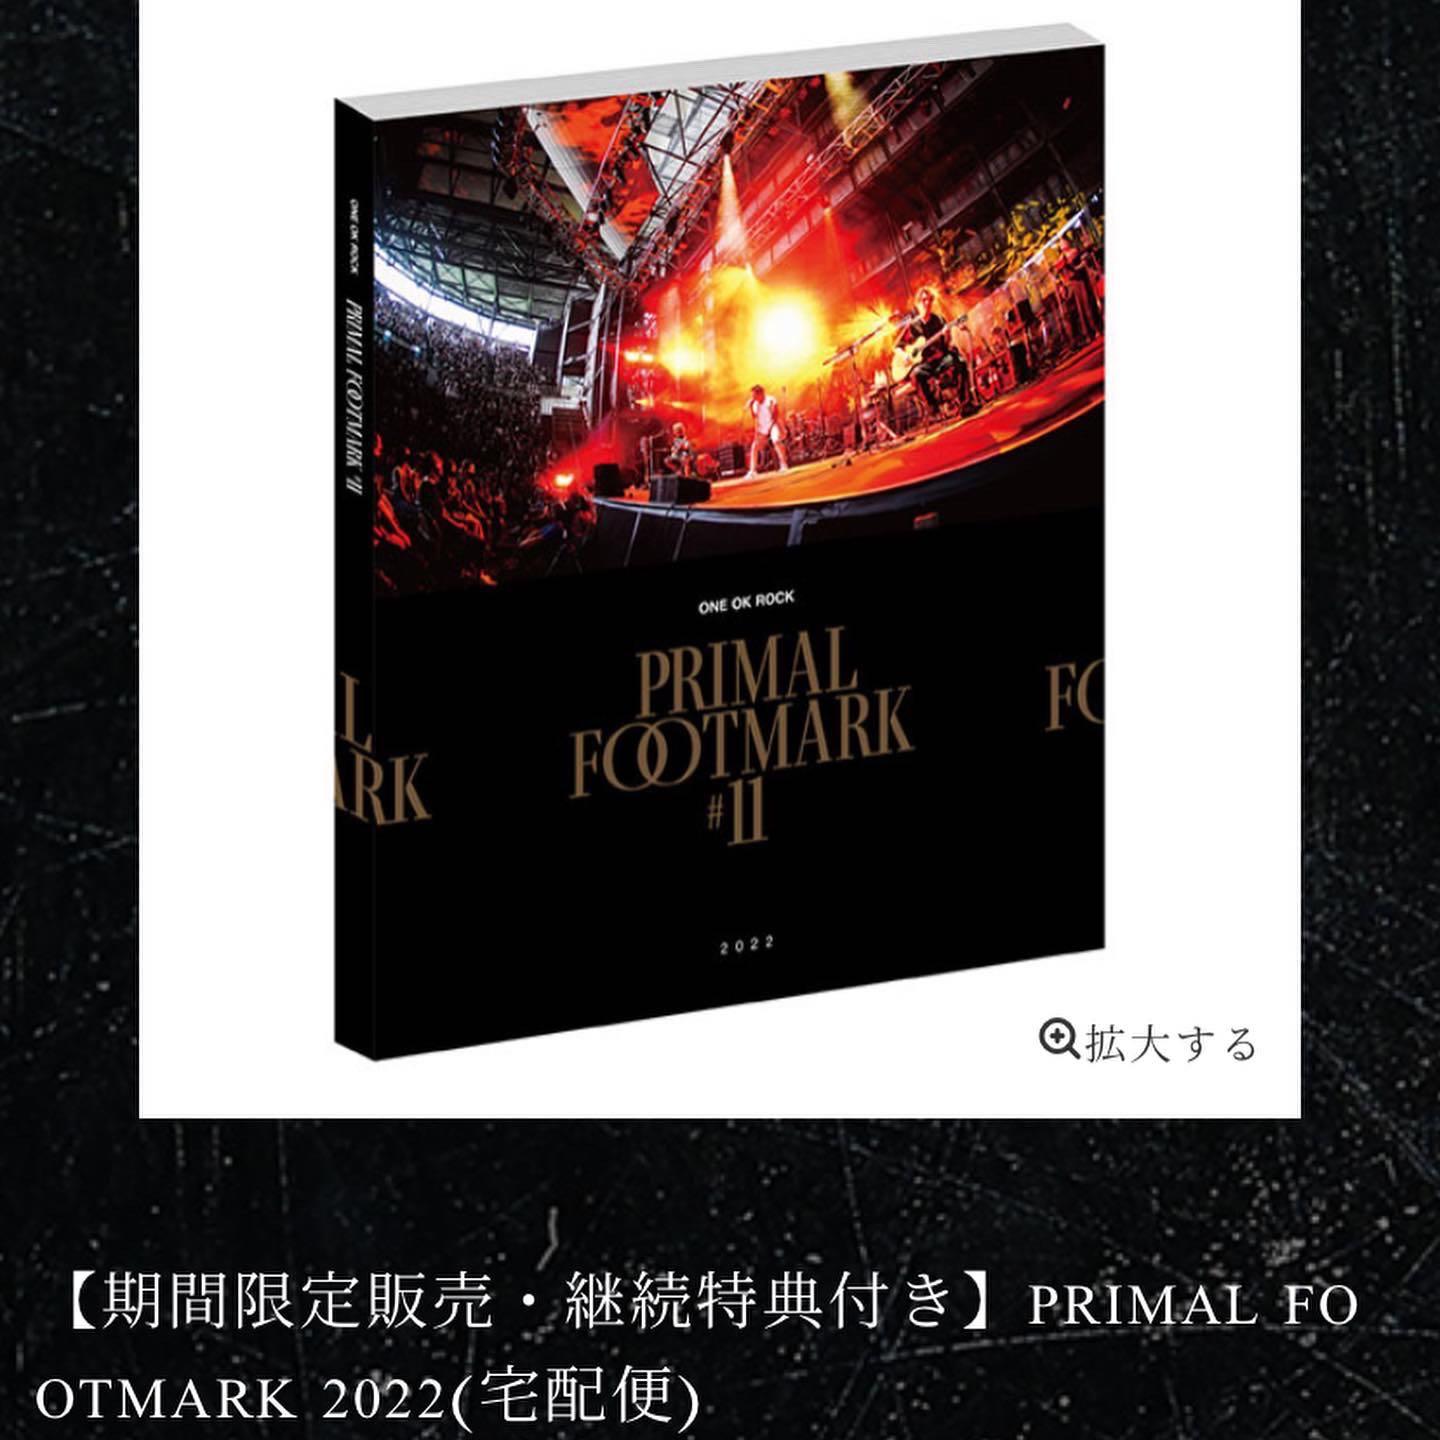 PRIMAL FOOTMARK #11 ONE OK ROCK 2022 - ミュージシャン